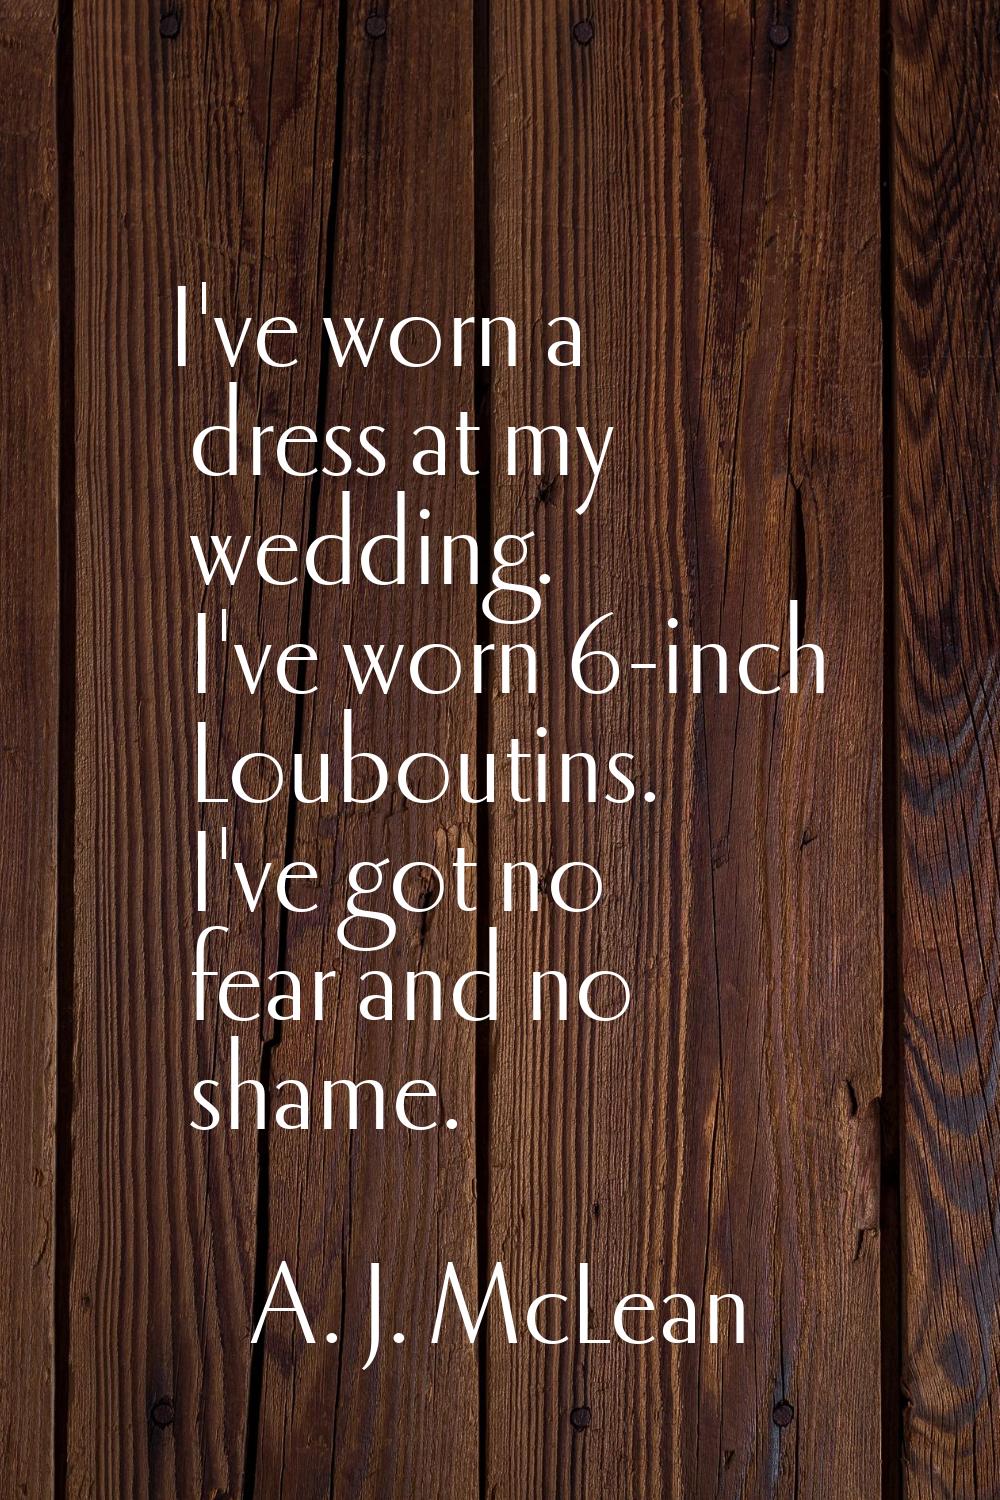 I've worn a dress at my wedding. I've worn 6-inch Louboutins. I've got no fear and no shame.